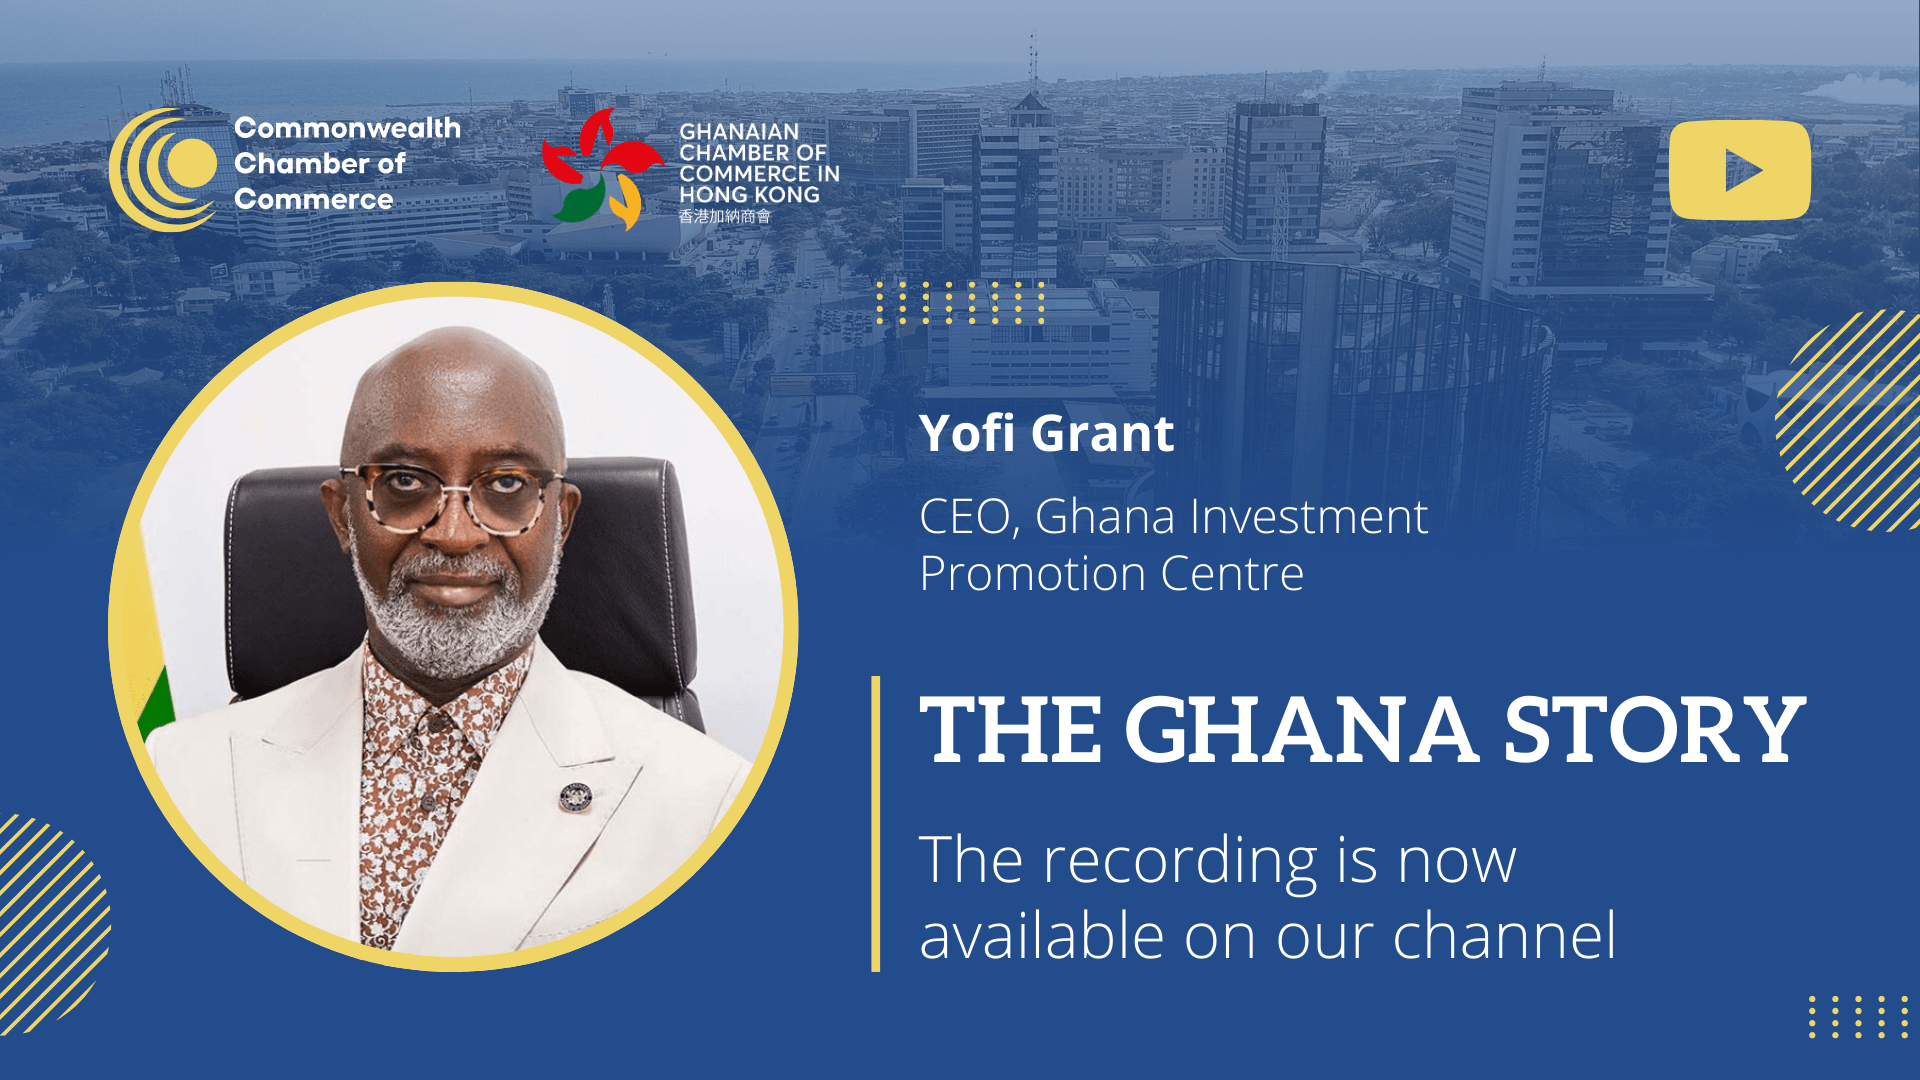 The Ghana Story | Webinar Recording